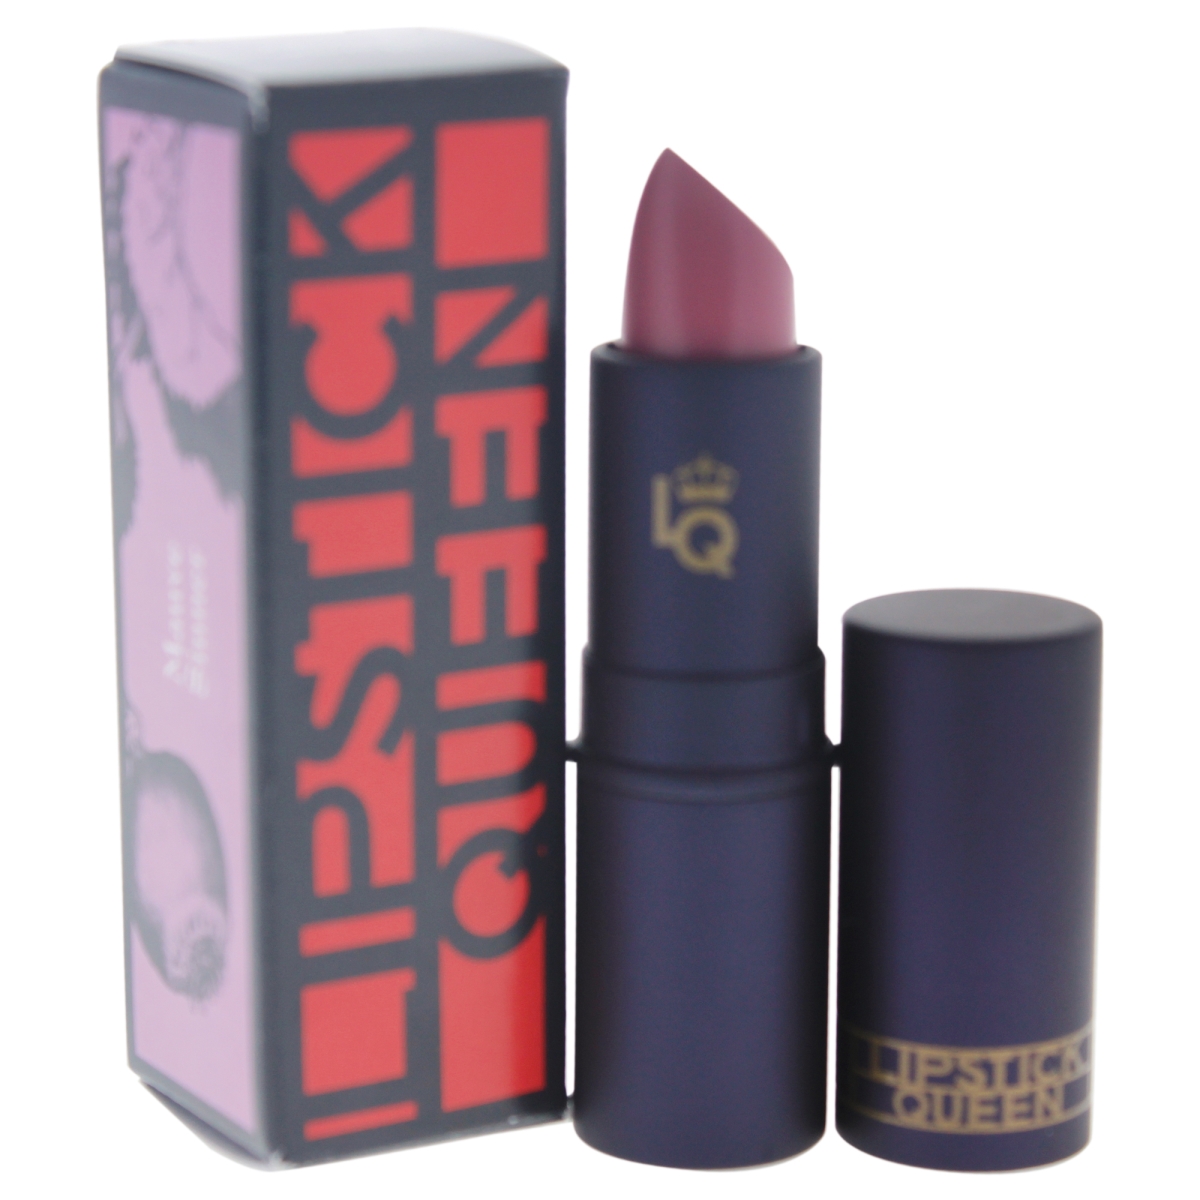 W-c-11743 0.12 Oz Sinner Lipstick - Mauve For Women